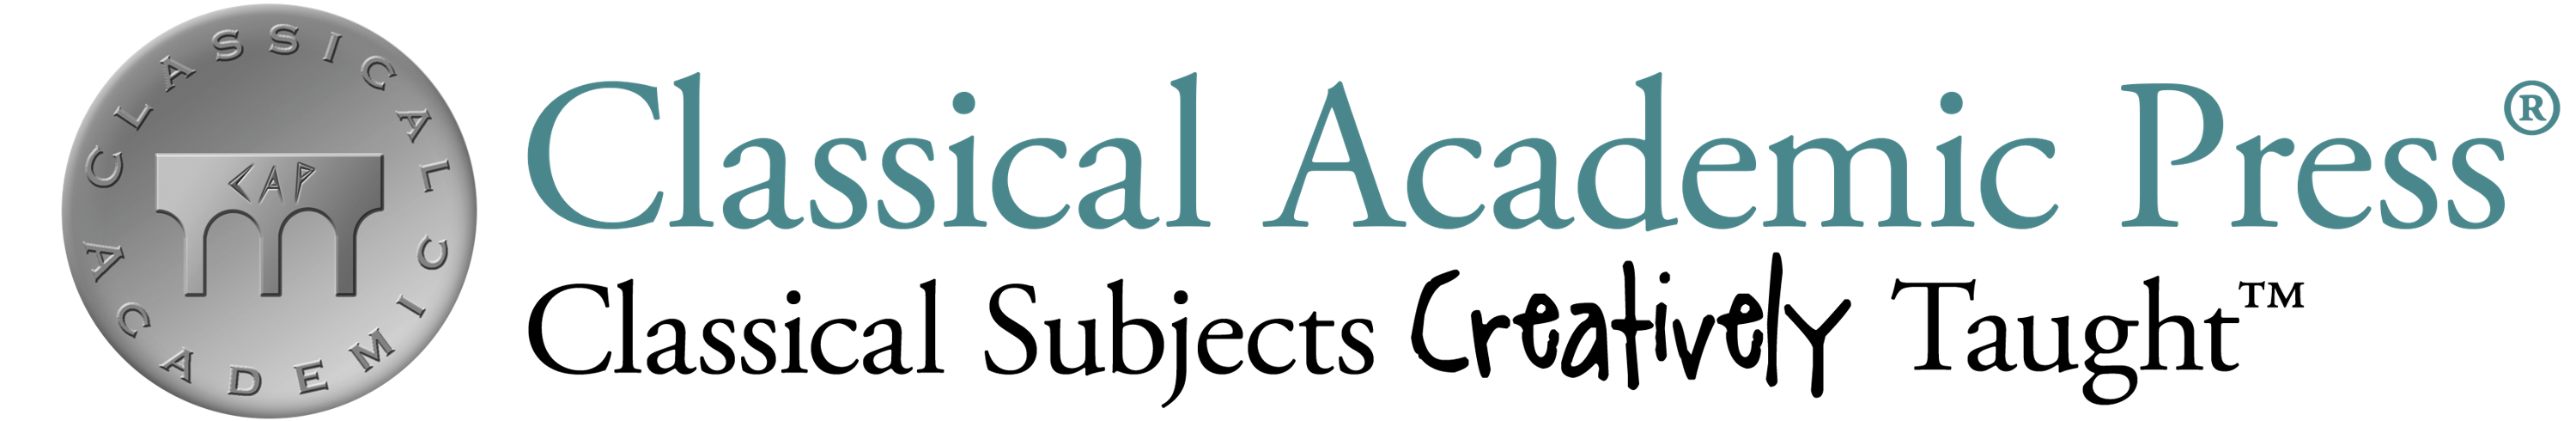 Classical Academic Press logo